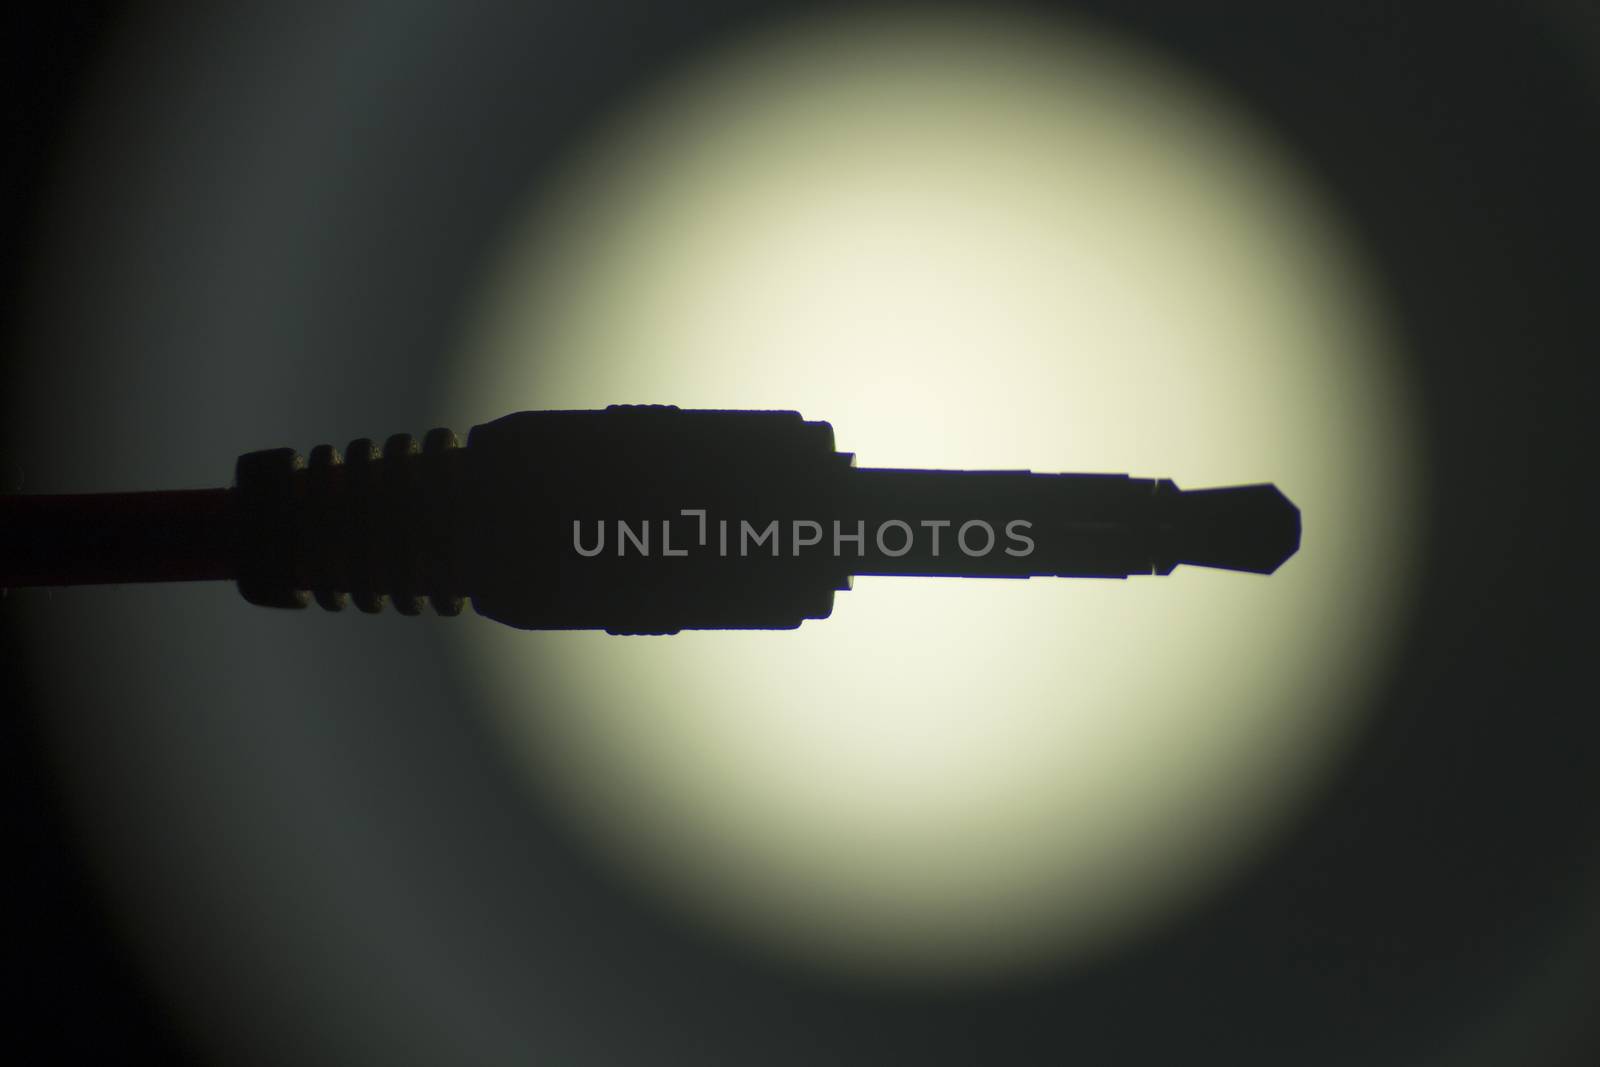 Audio cable artistic silhouette in circular light vignette photograph.